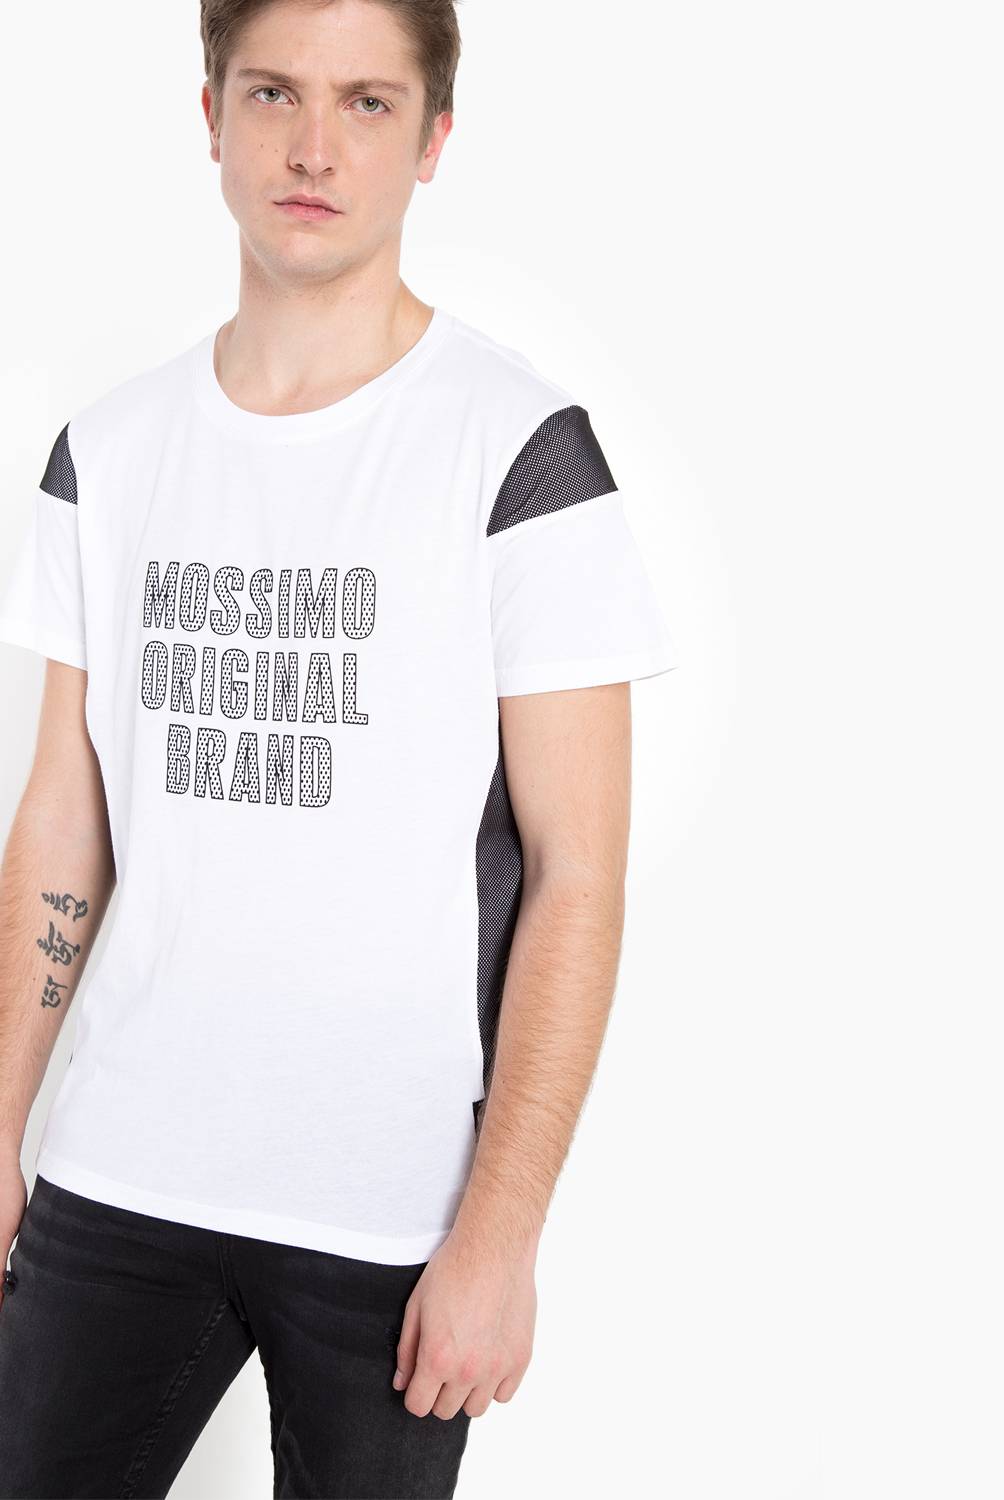 Mossimo - Camiseta